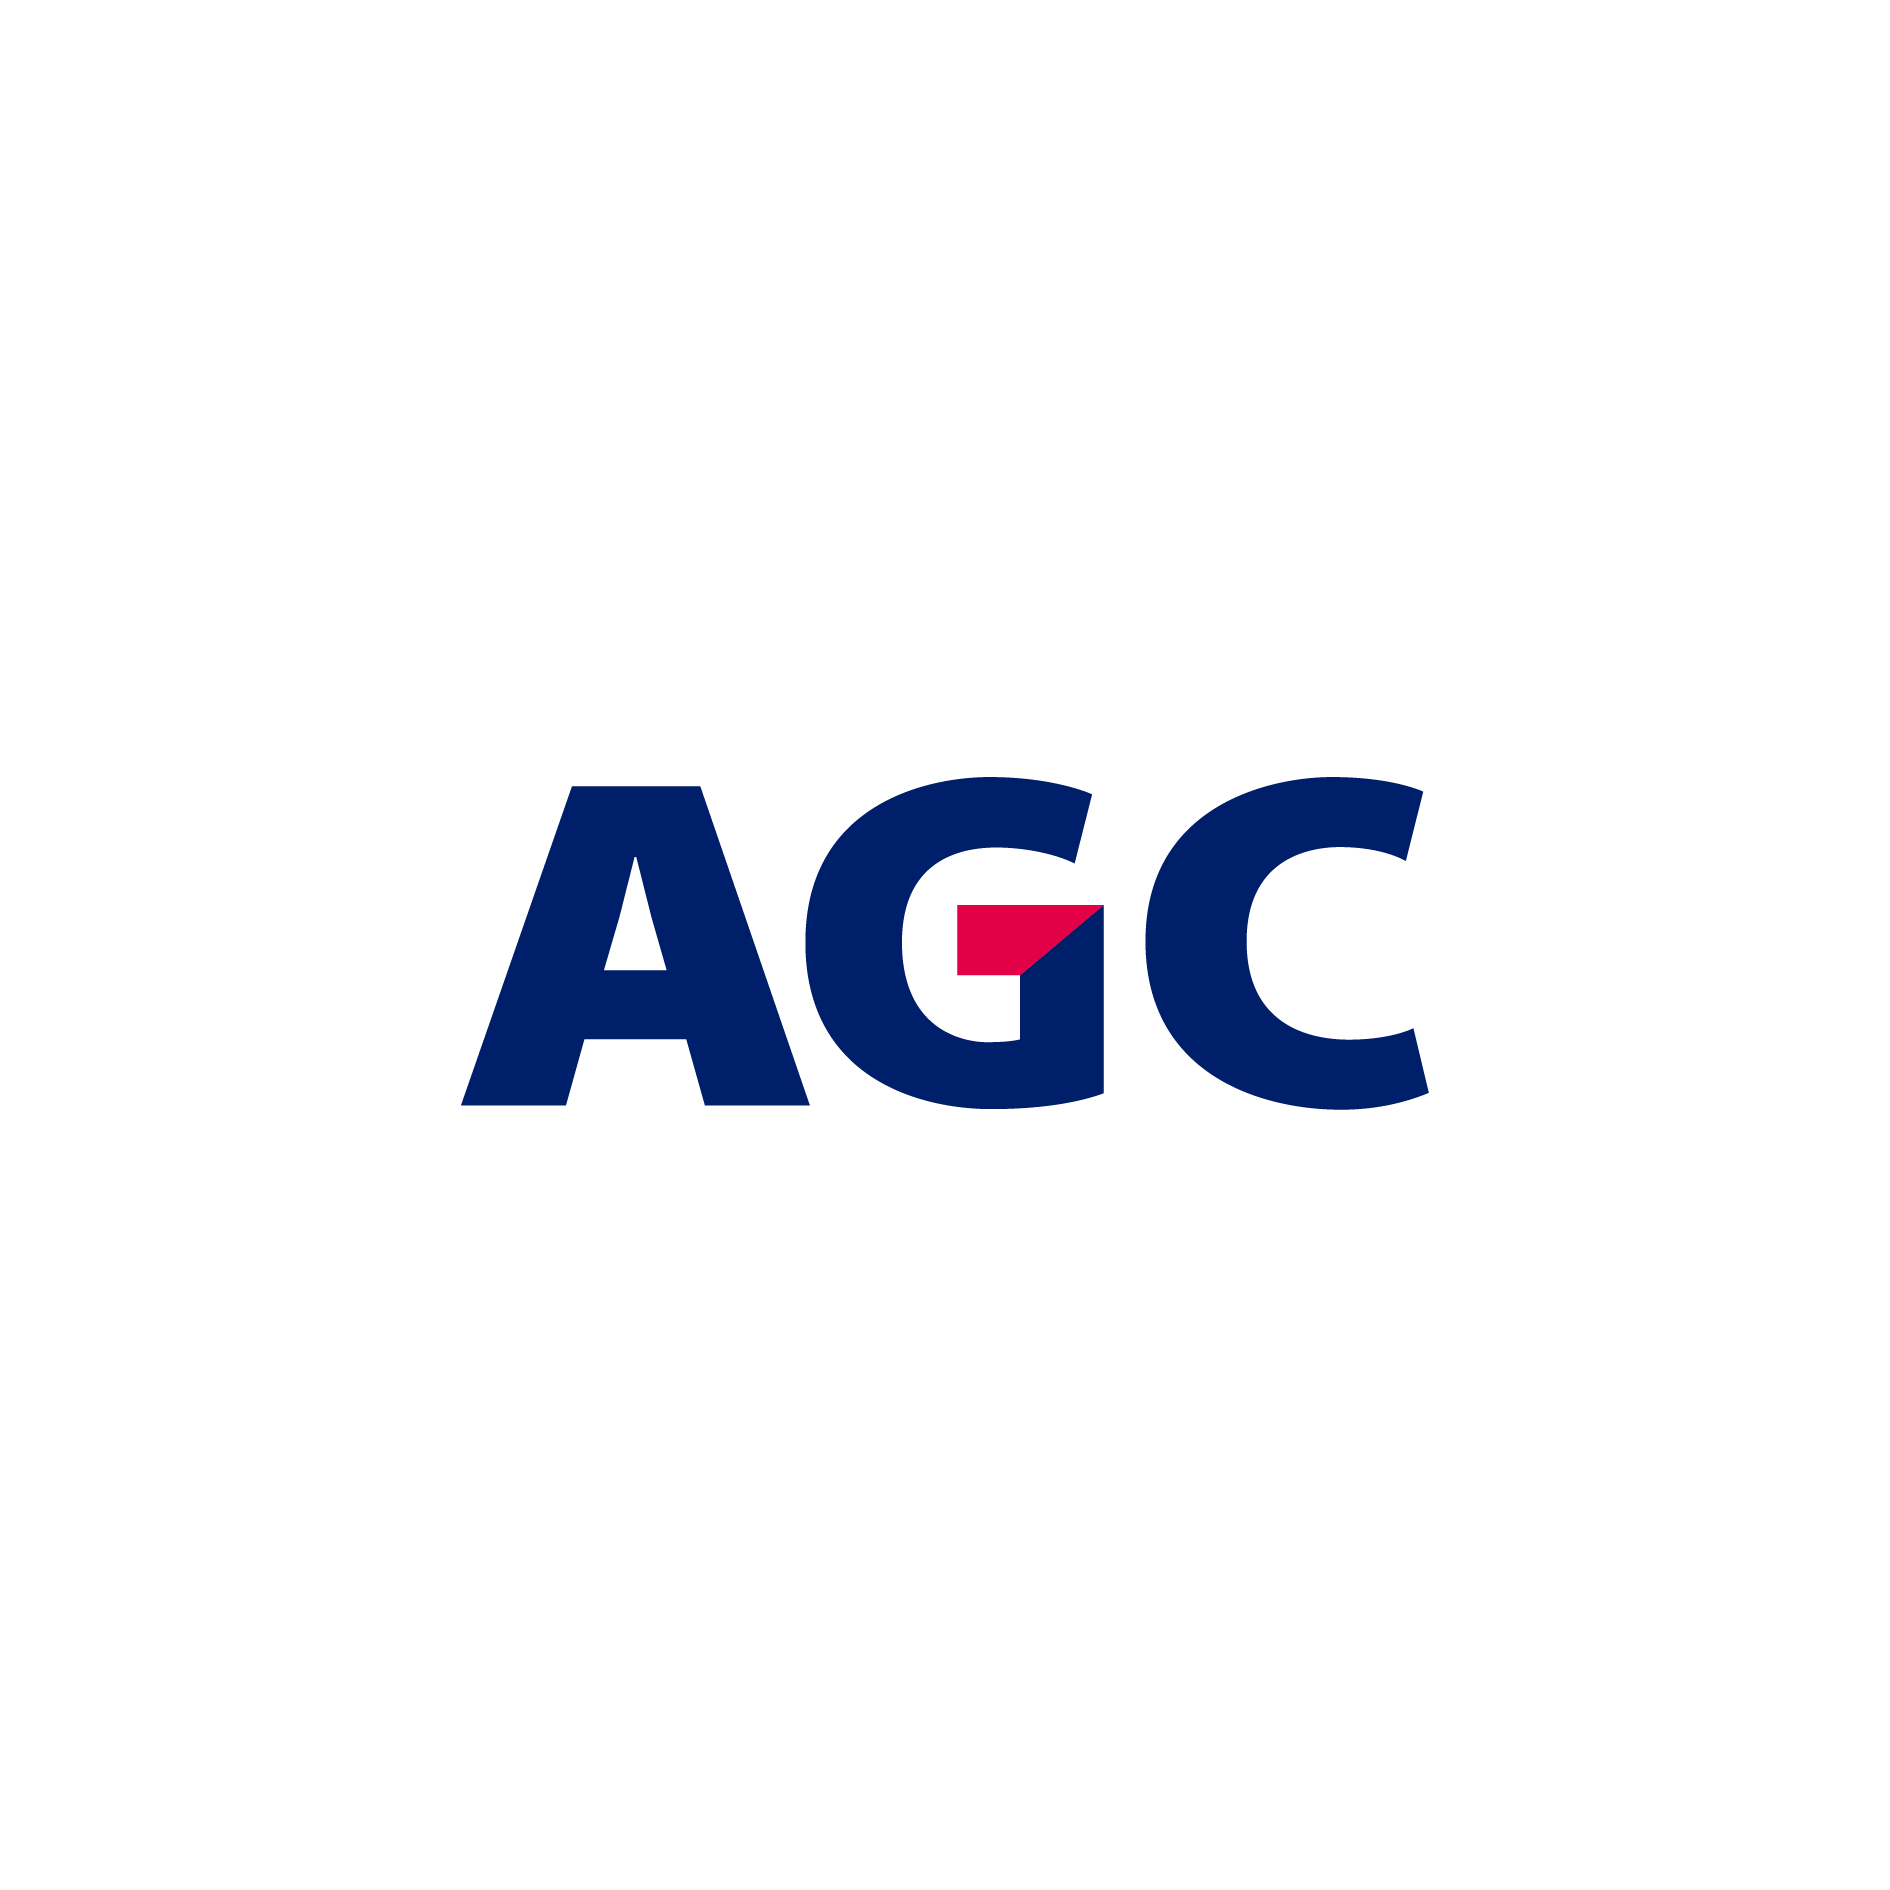 AGC GLASS France